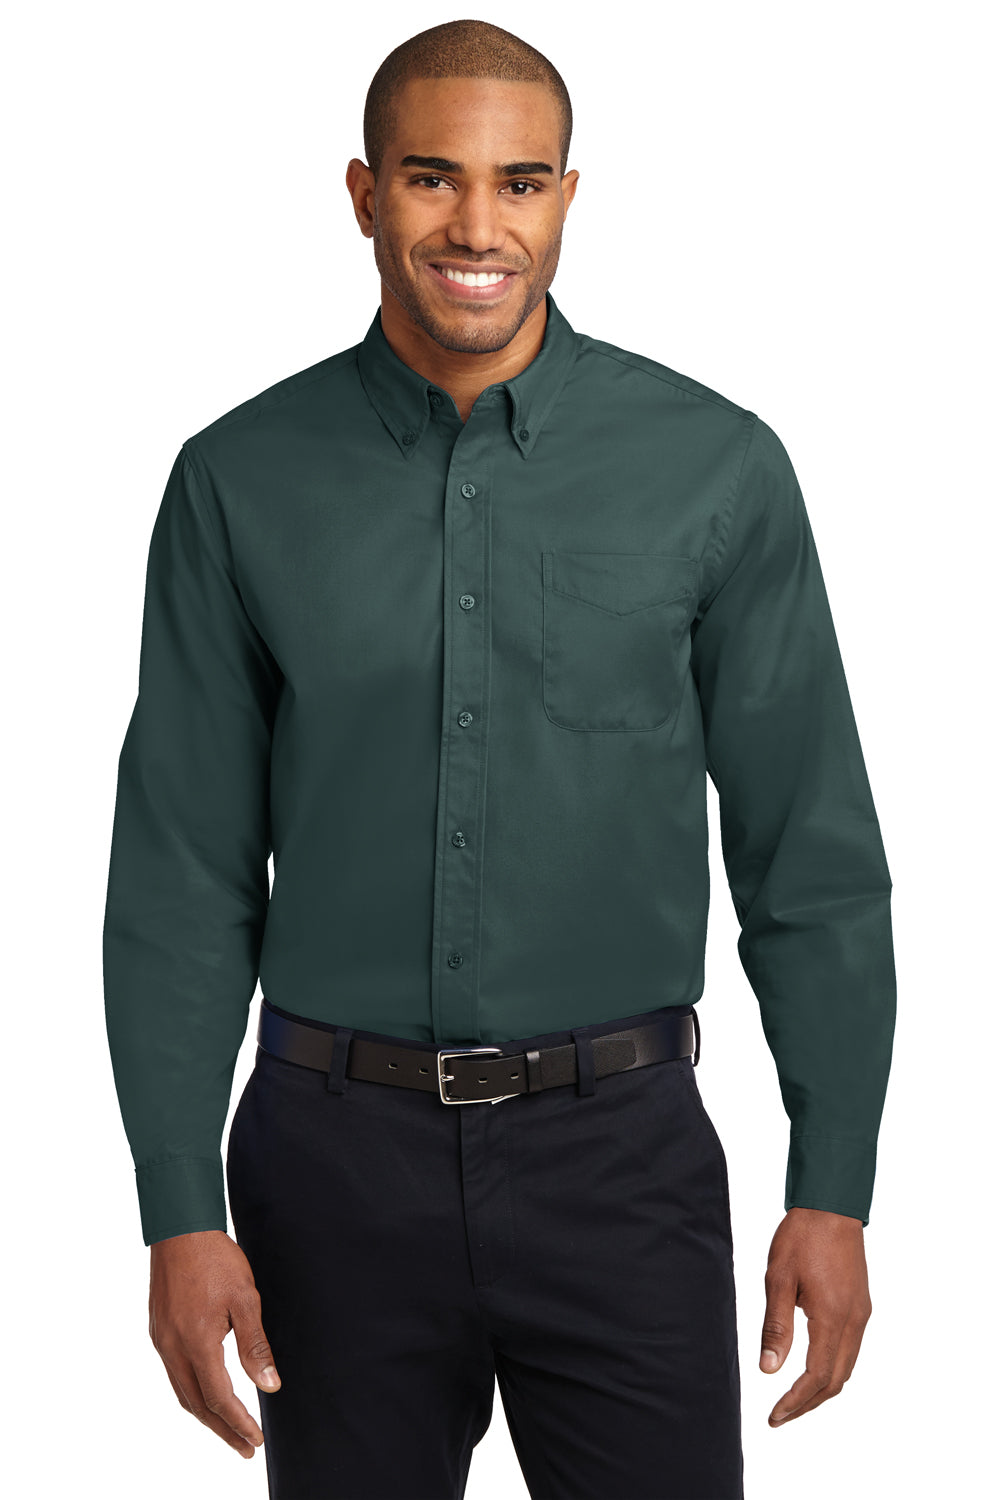 dark green shirt mens